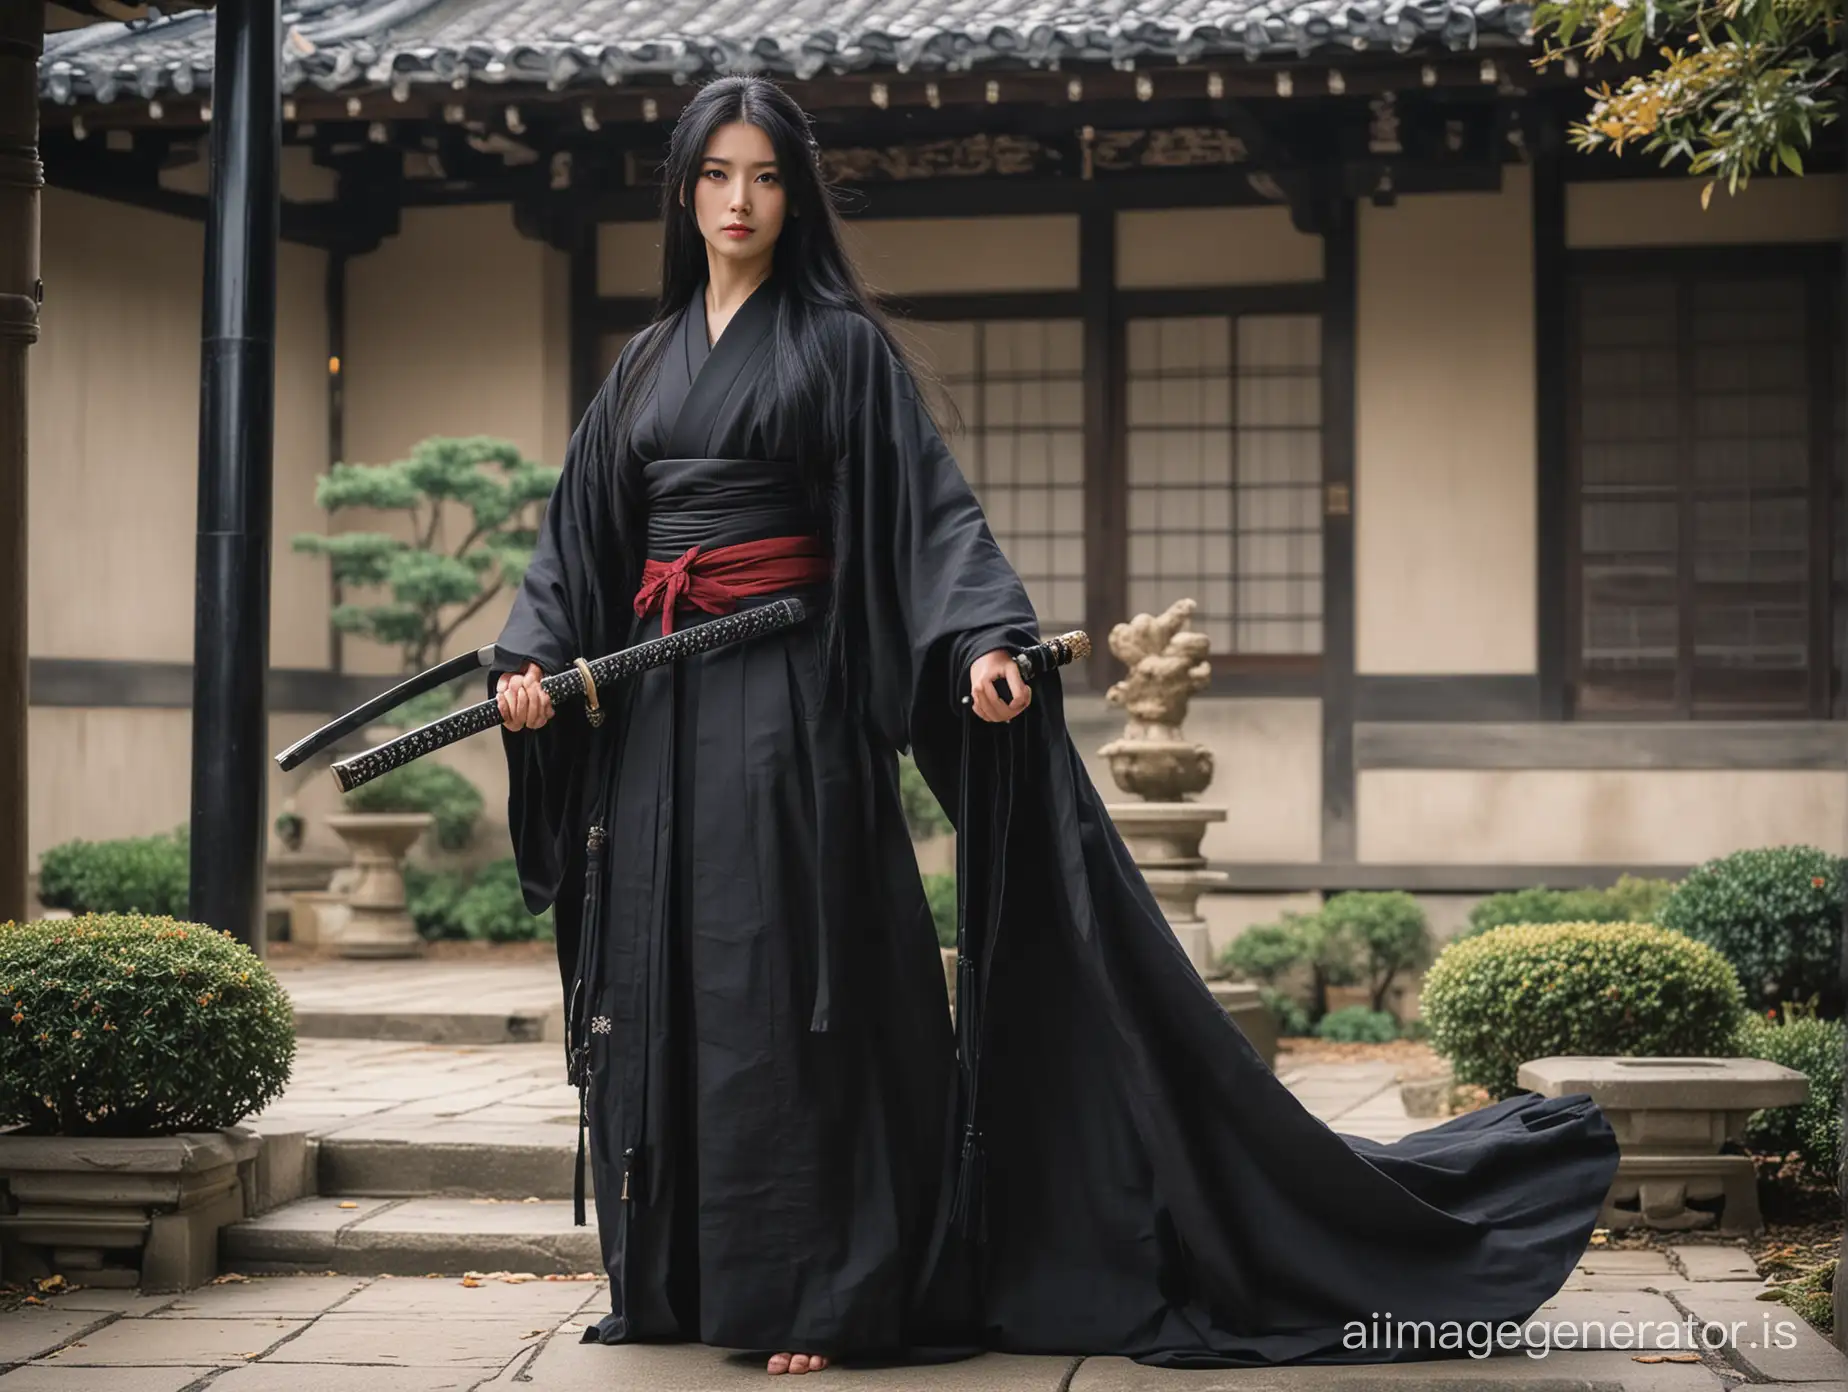 Black Kimono, long black hair, on a mansion courtyard, holding a katana